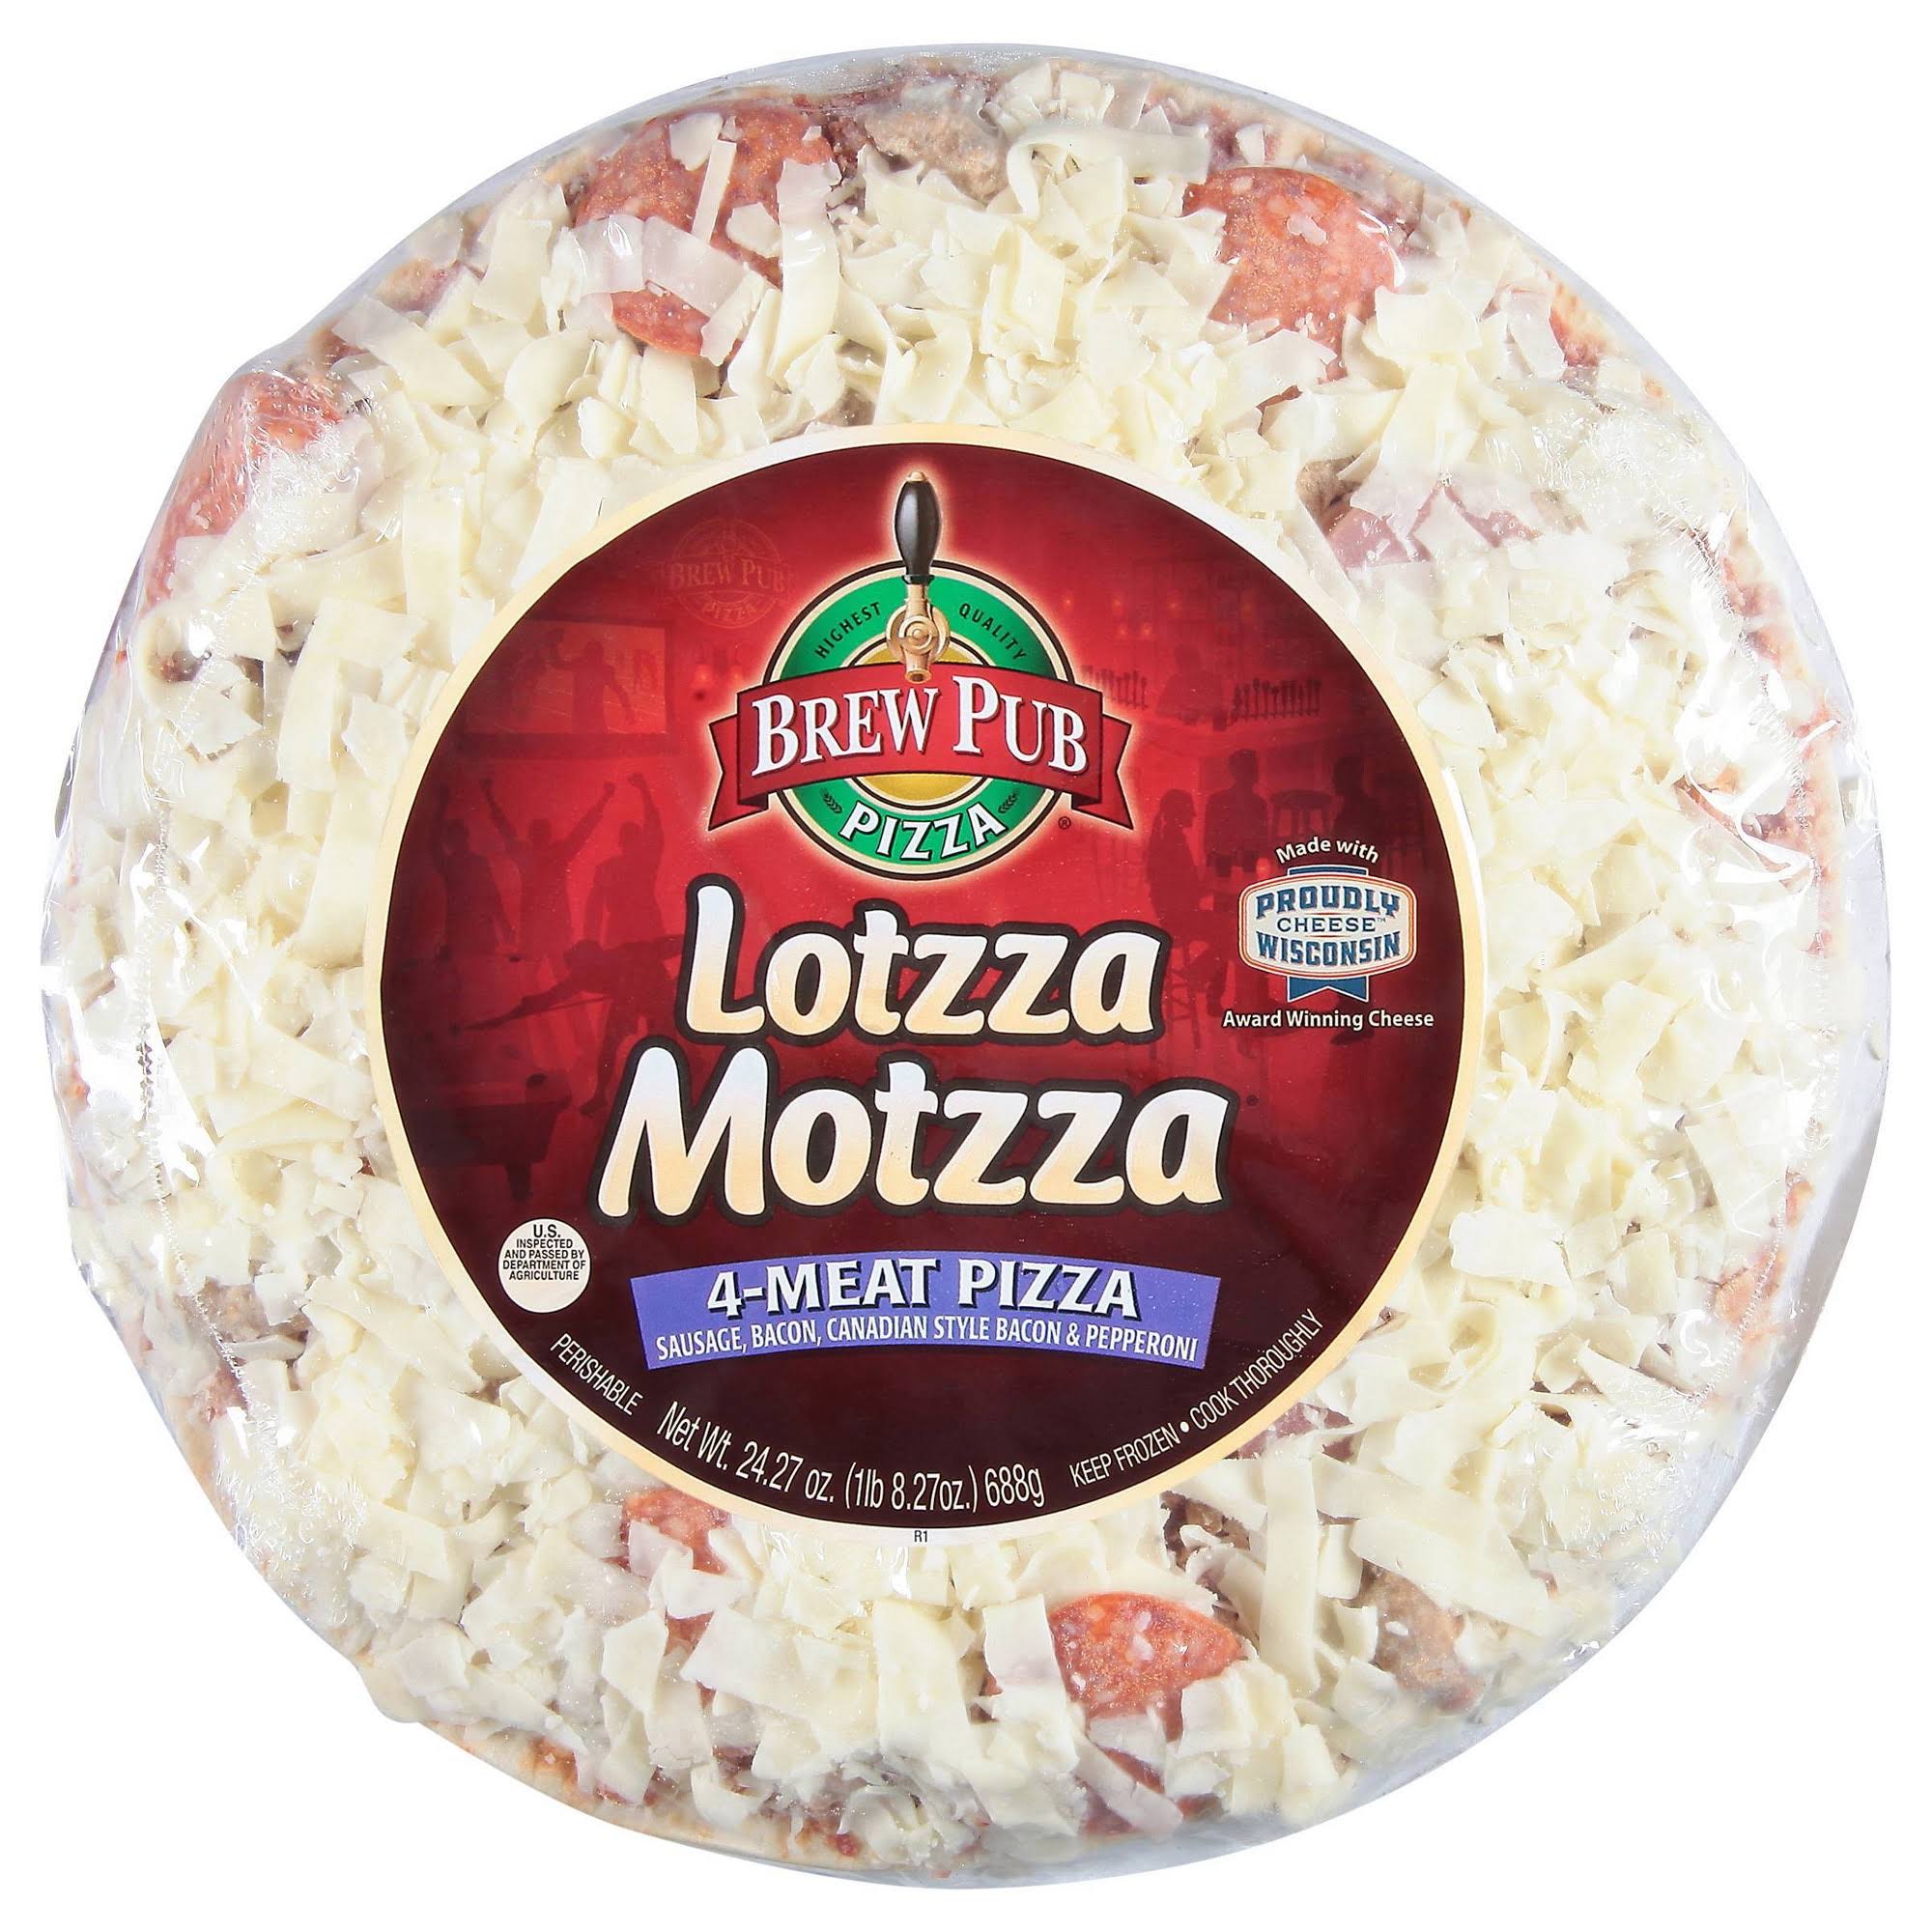 Brew Pub Lotzza Motzza Pizza, 4-Meat, 12 Inch - 28.25 oz